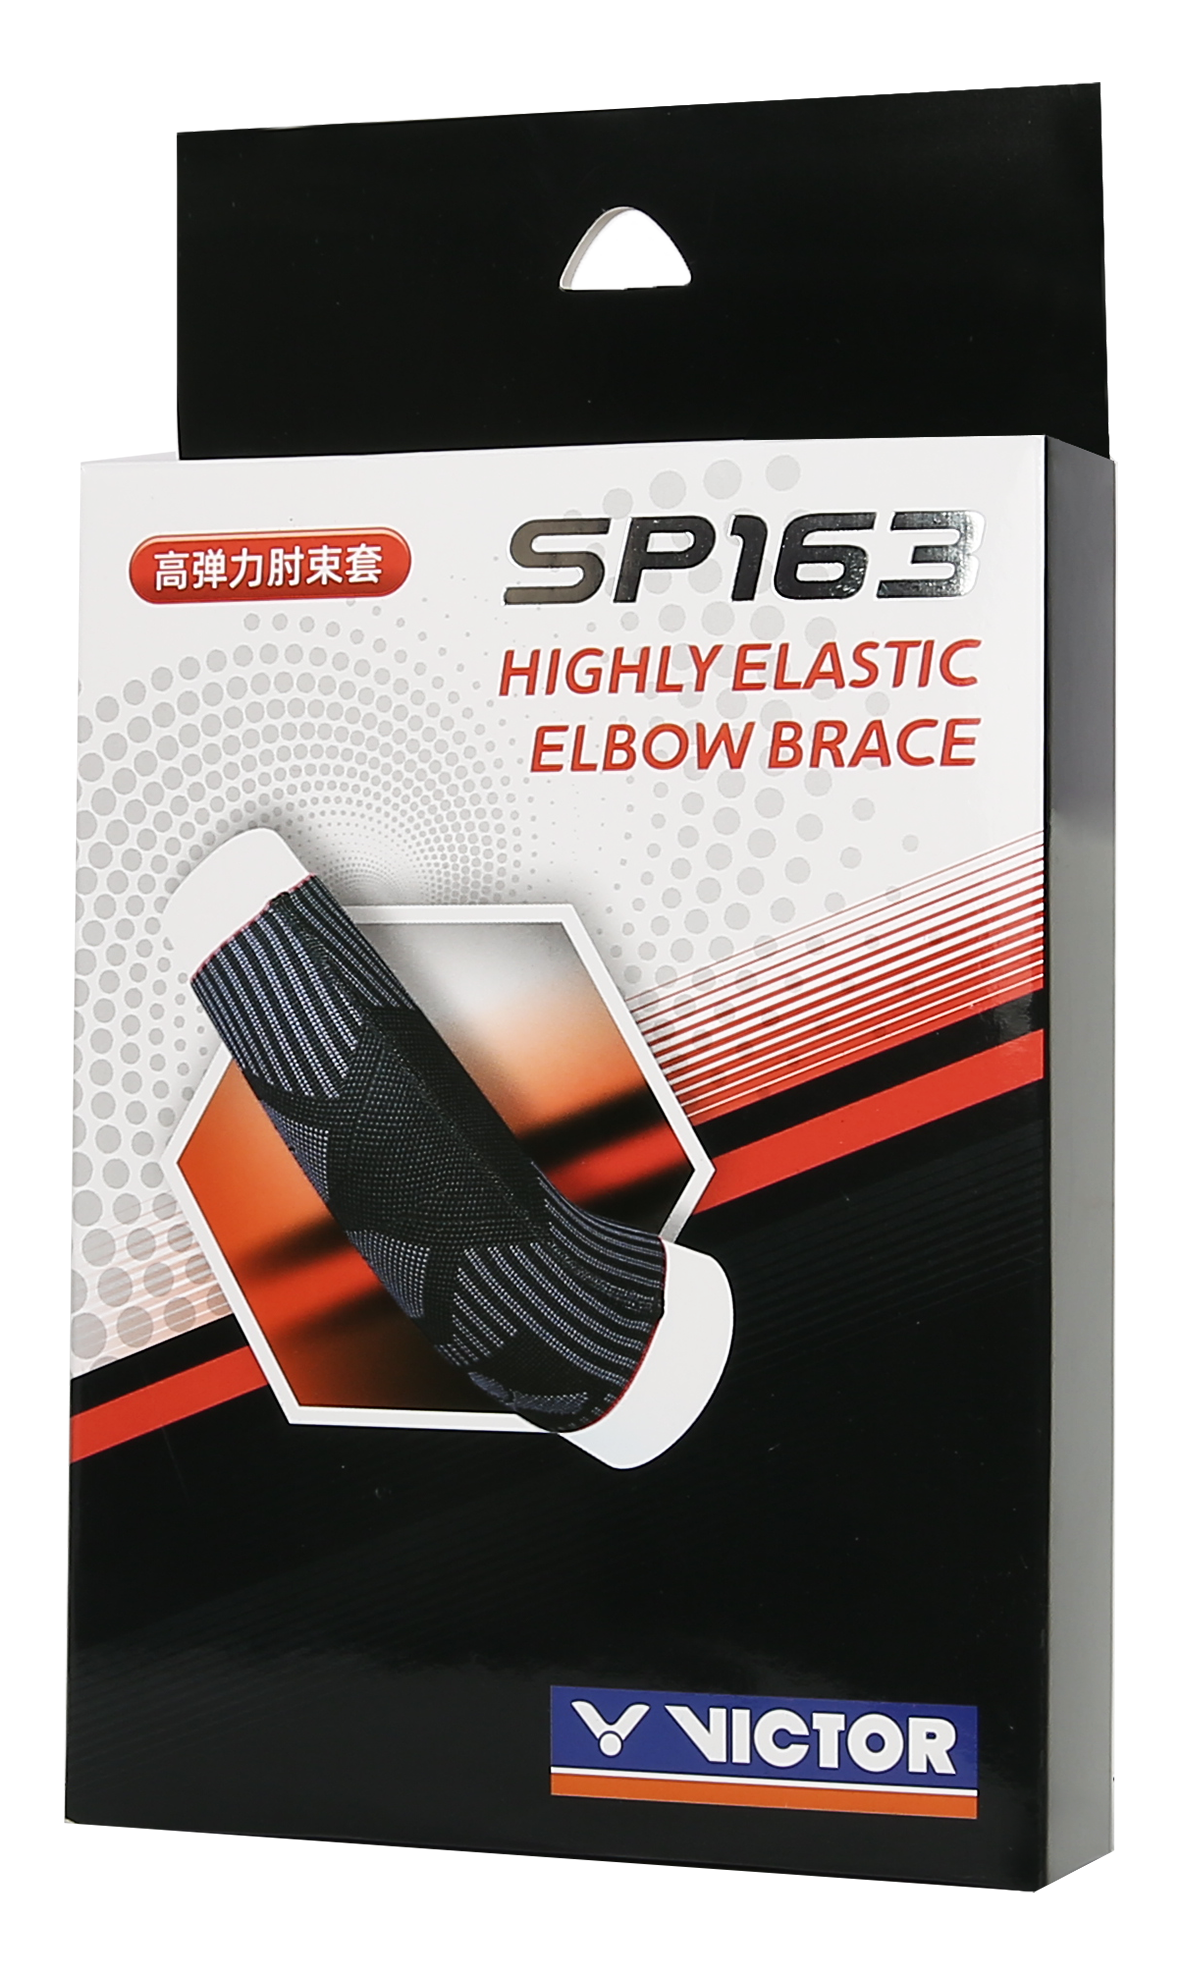 SP163 ELASTIC ELBOW BRACE